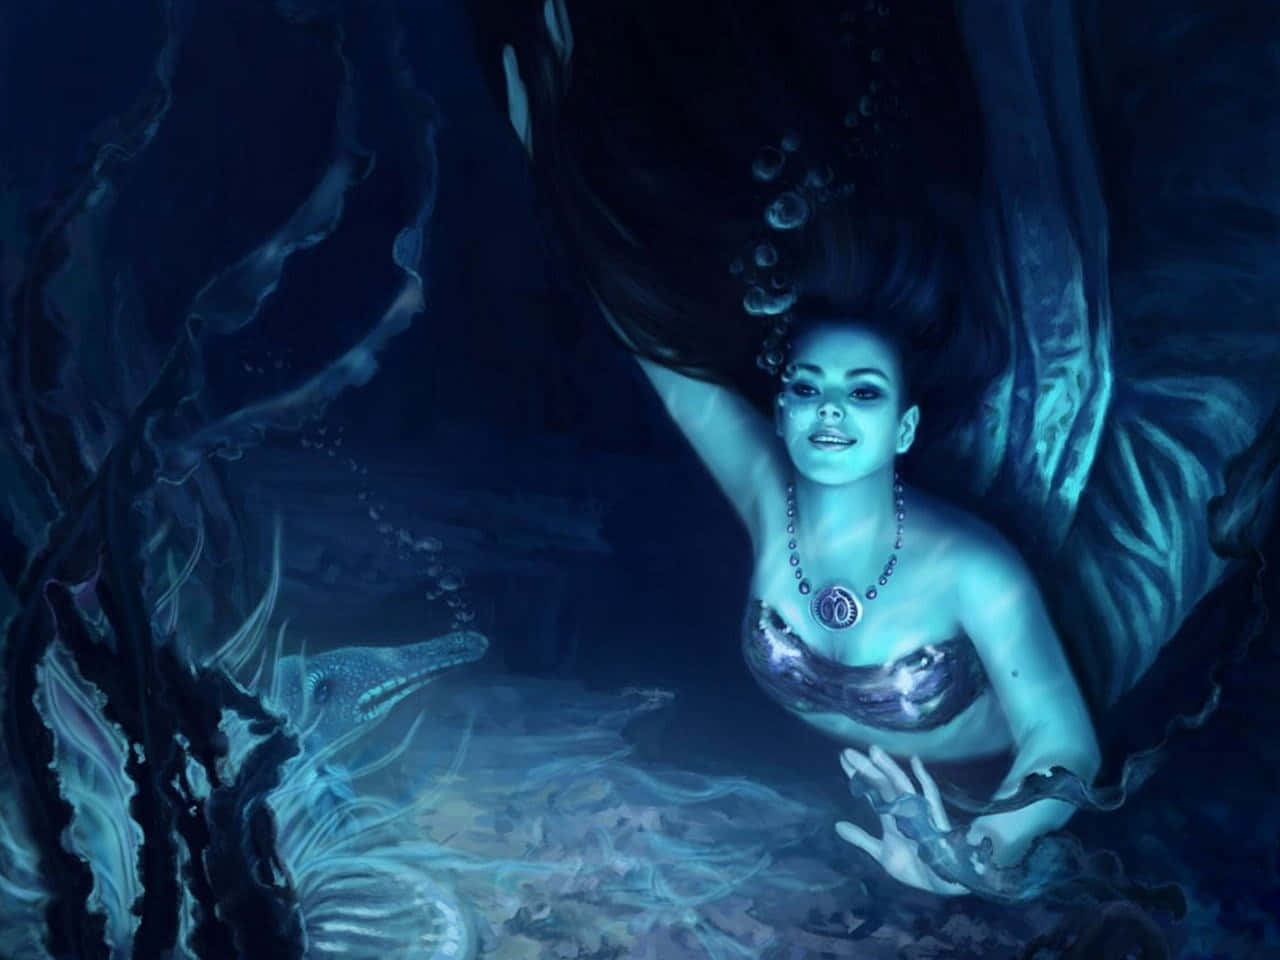 Meerjungfrau,farbiges Bild, Dunkle Unterwelt